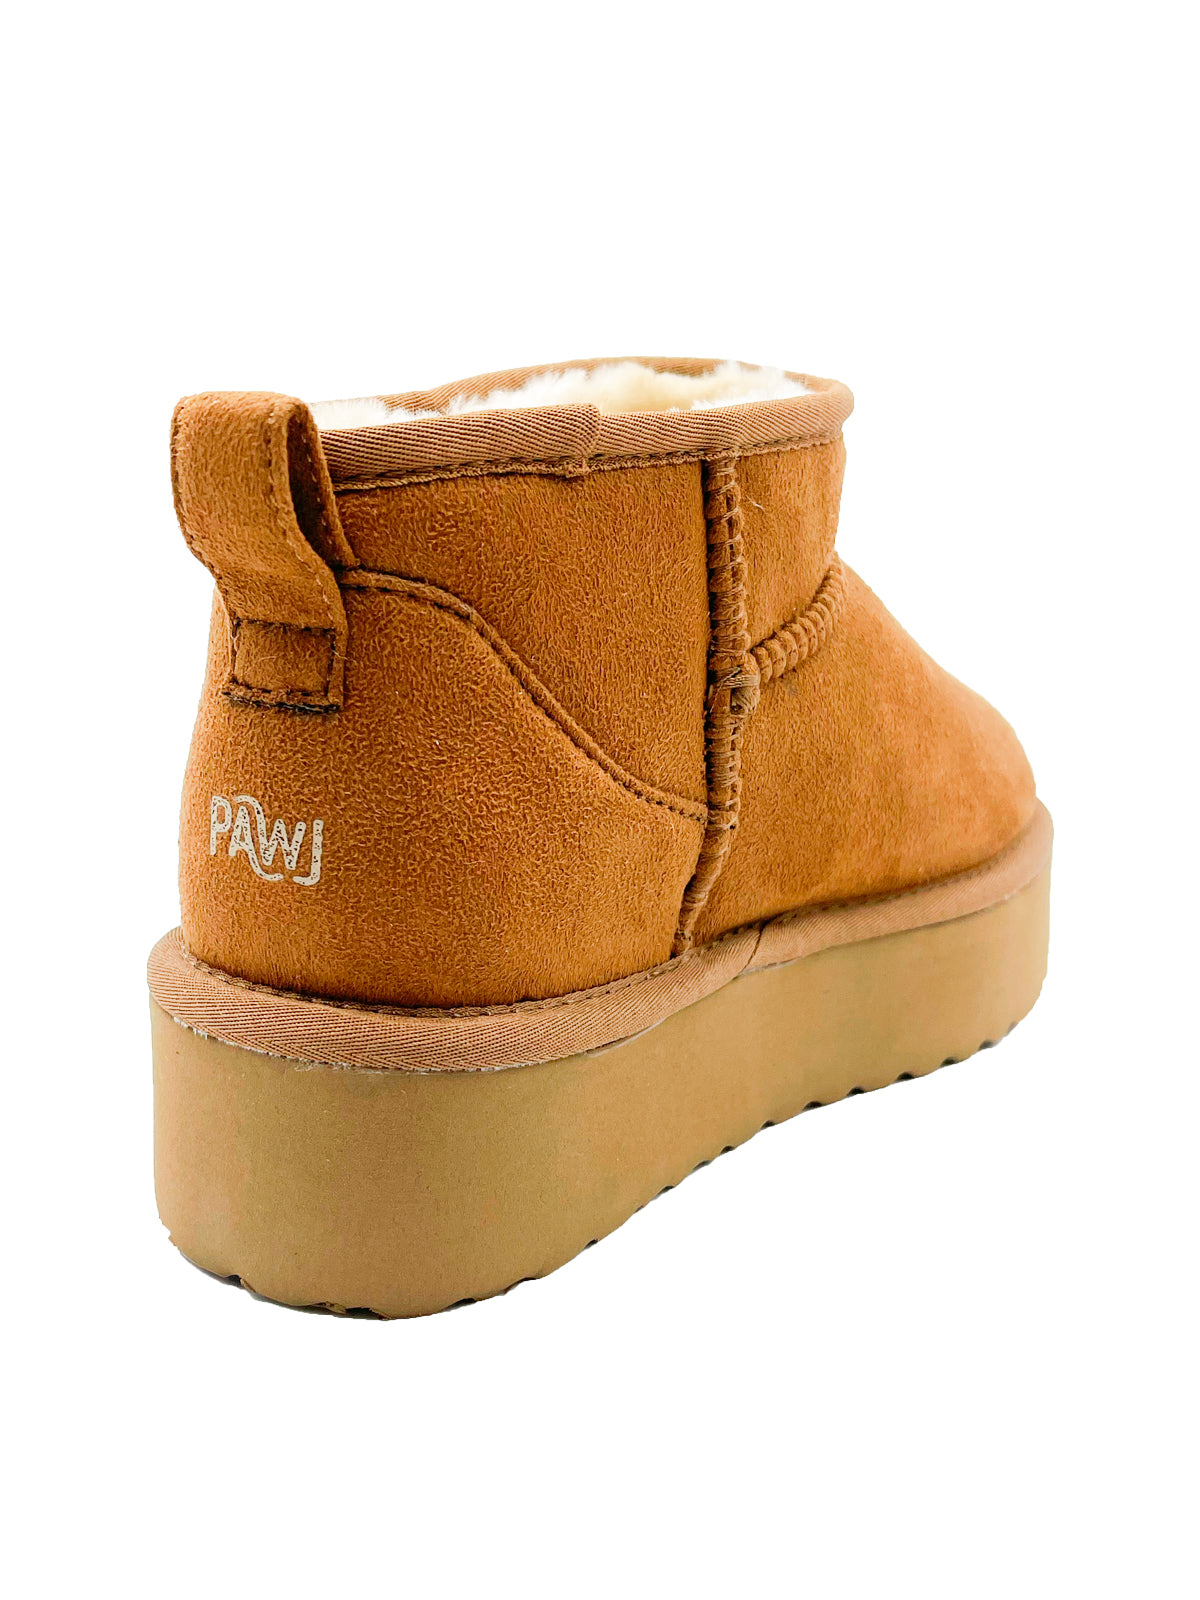 PAWJ California | Ultra Mini Platform Boot - Chestnut / Aspen Snow | Vegan, Cruelty-Free Footwear